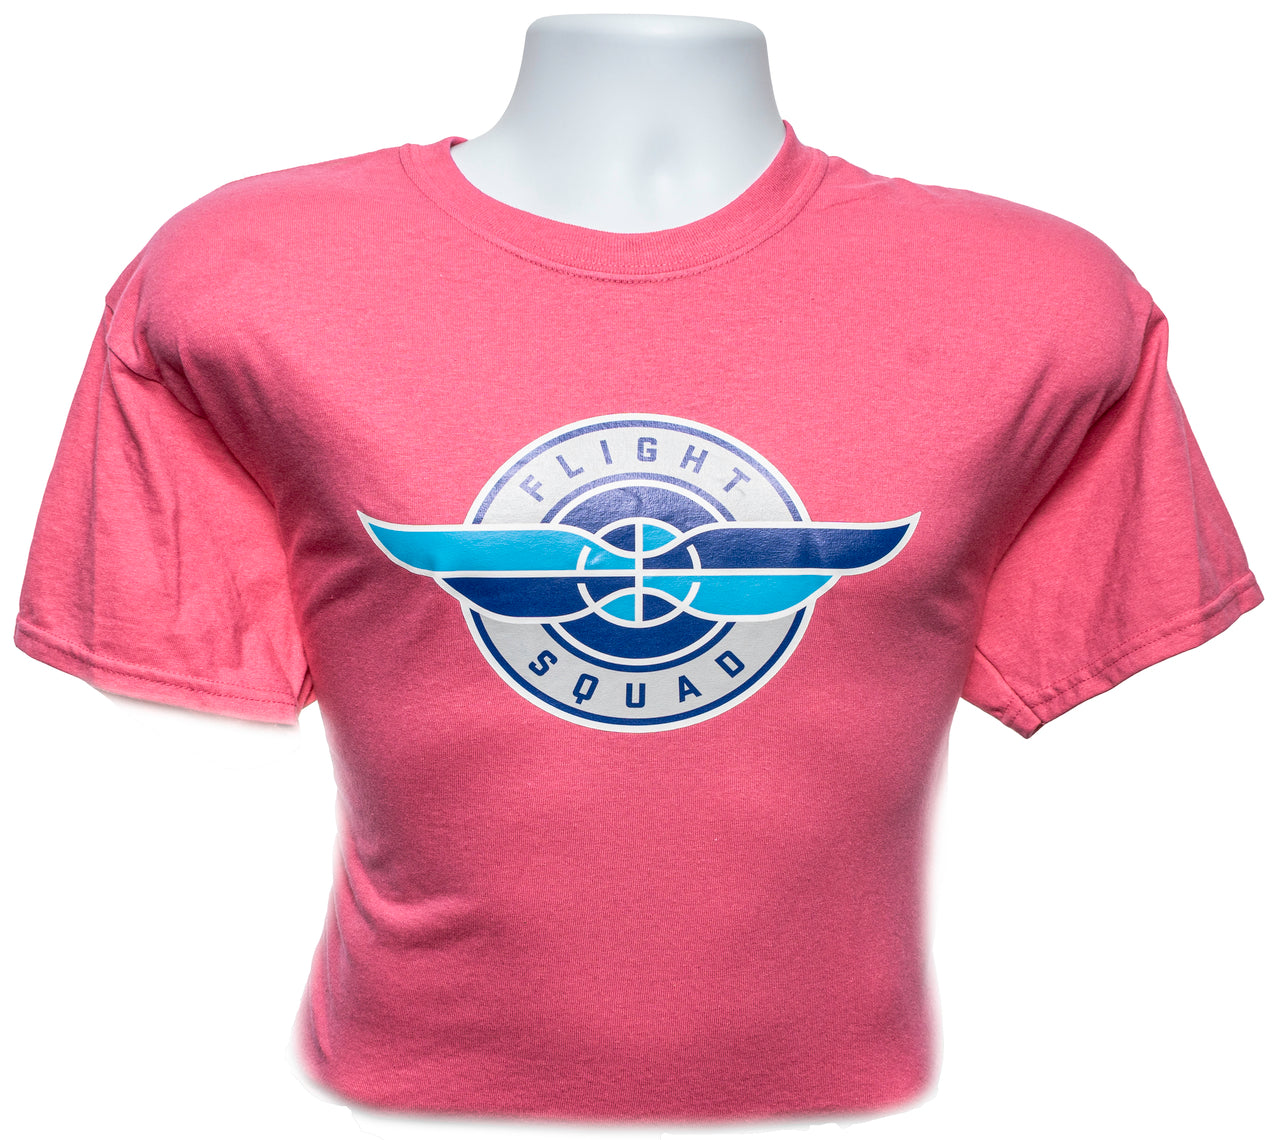 Heather Pink Tee Shirt – LuckyBird Blanks, Inc.